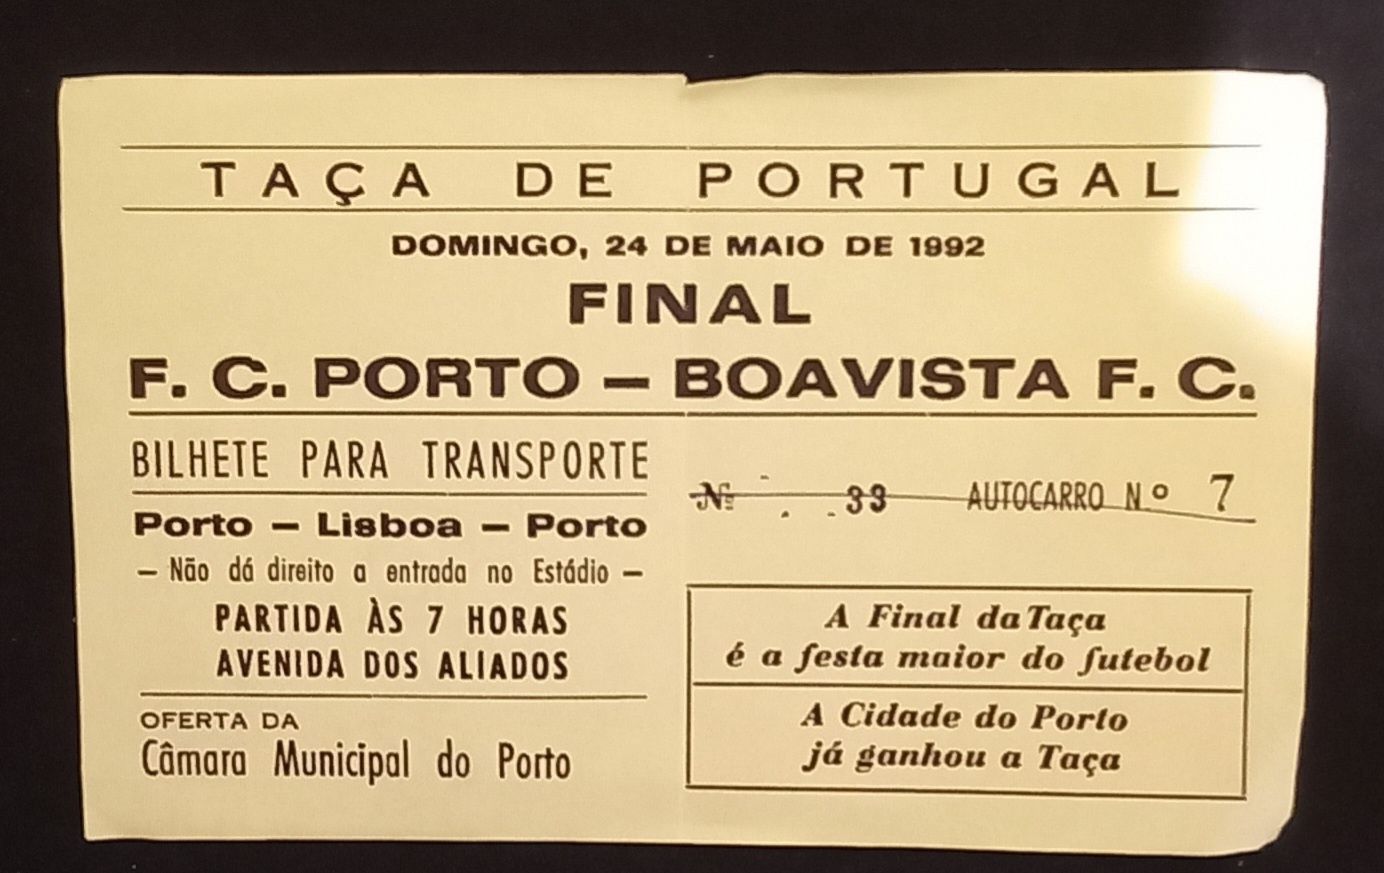 Bilhete de transporte da final taça de Portugal 1992.